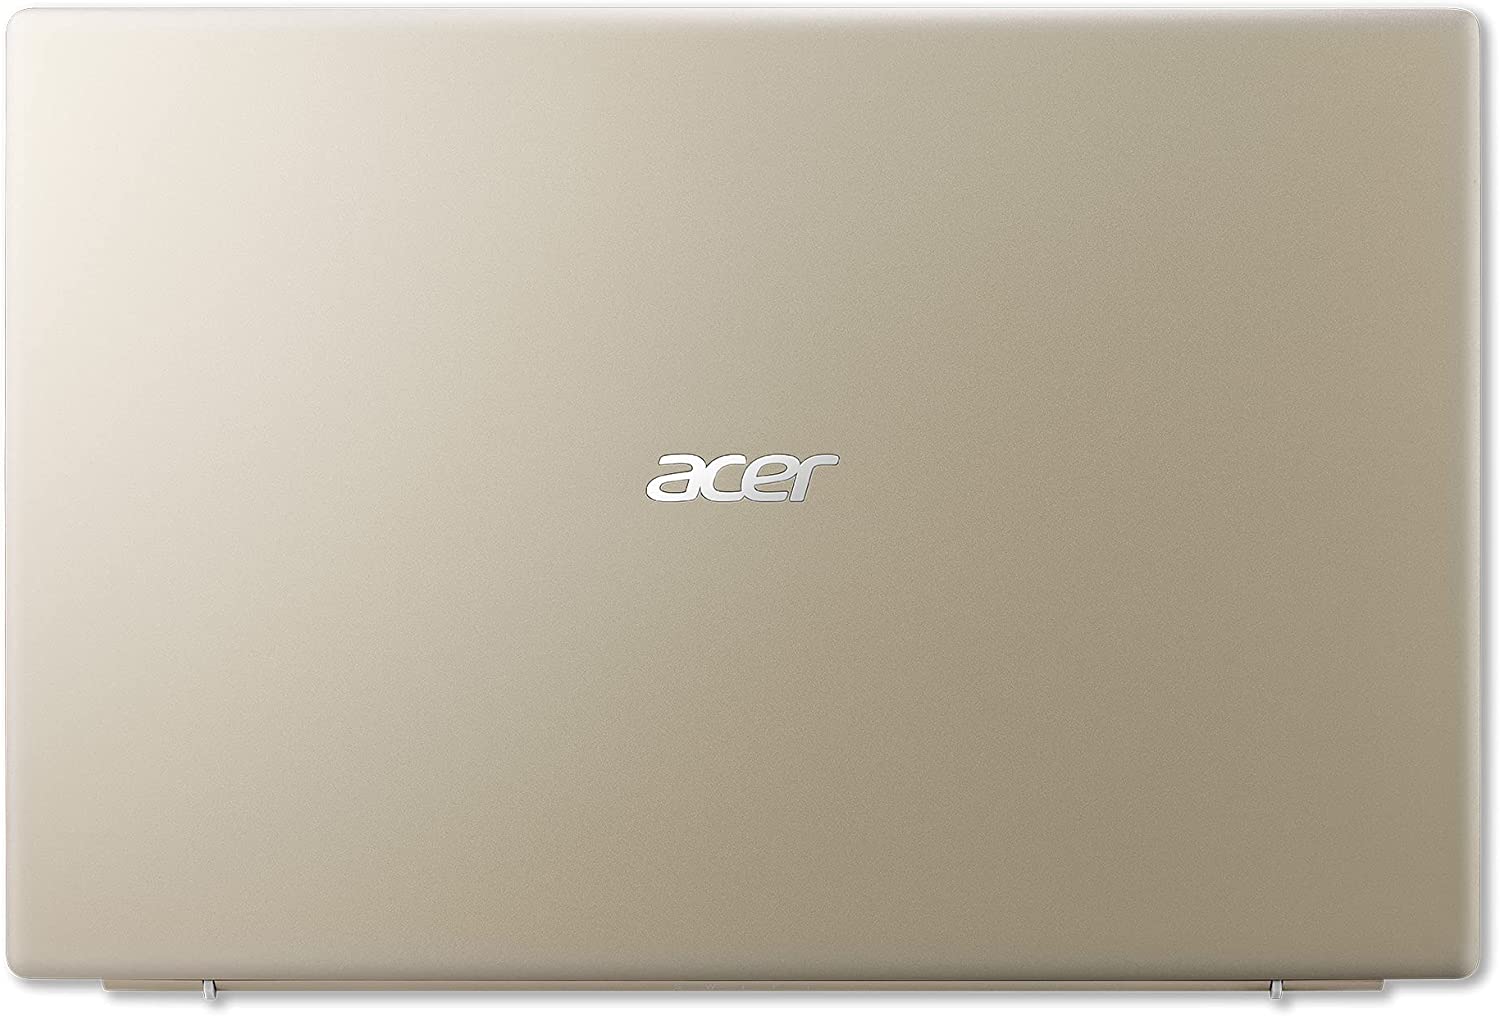 Acer Swift X SFX14-41G - AMD Ryzen 7 5800U / 1.9 GHz - Win 11 Home - GF RTX 3050 Ti - 16 GB RAM - 512 GB SSD - 14" IPS 1920 x 1080 (Full HD) - Wi-Fi 6 - silver, safari gold - kbd: US Intl - image 2 of 16